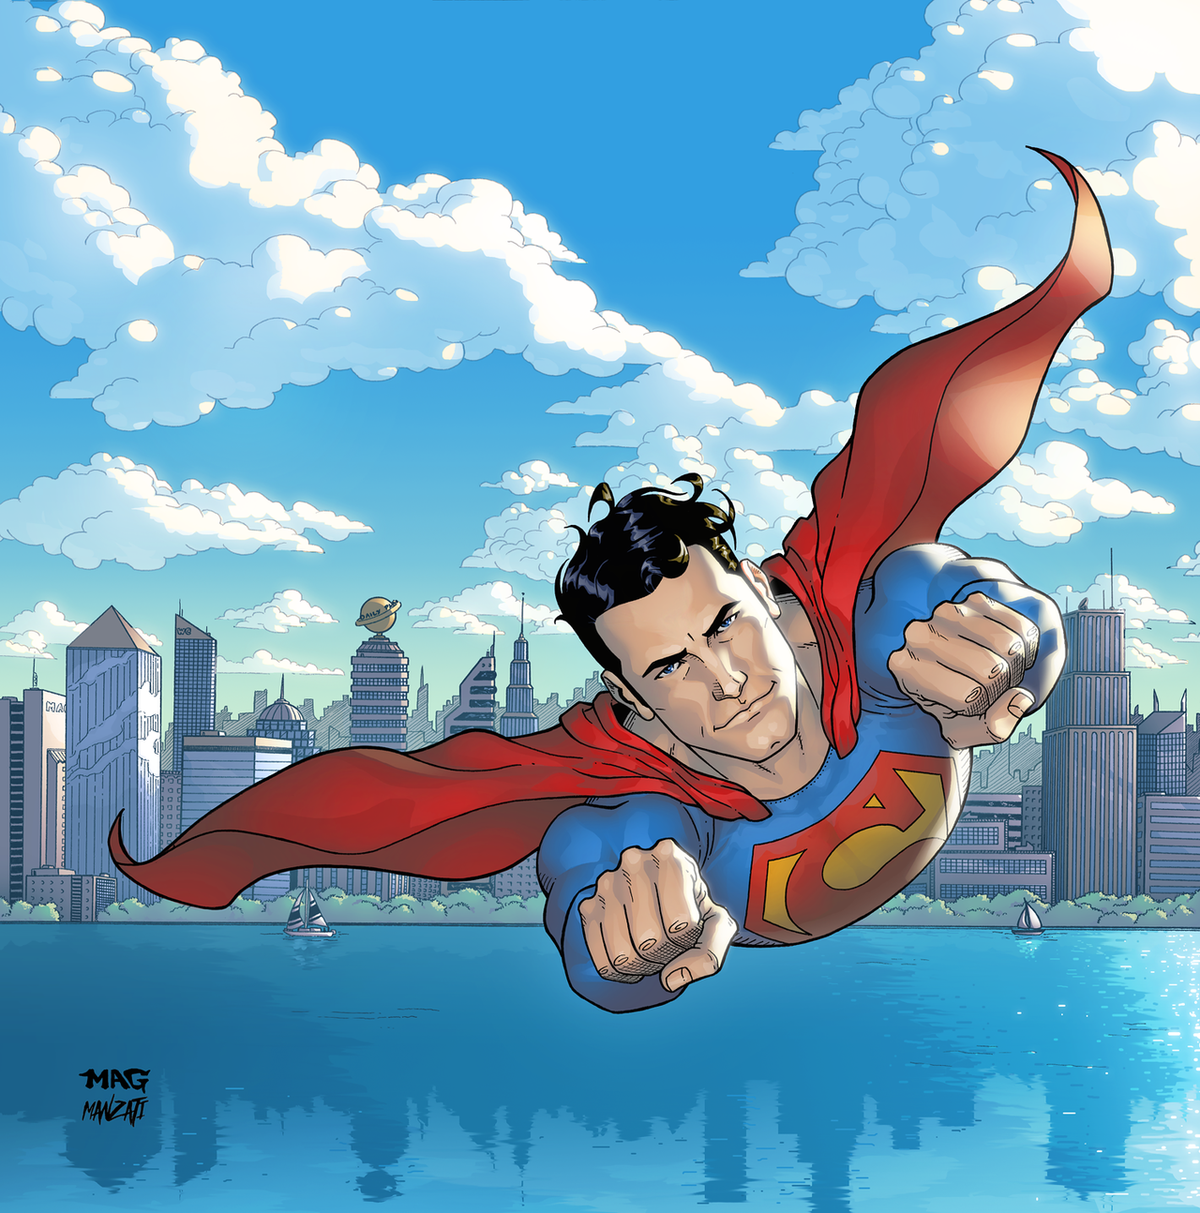 Superman speed up. Супермен в полете. Супермен летит. Полет Супермена. Летающий Супергерой.